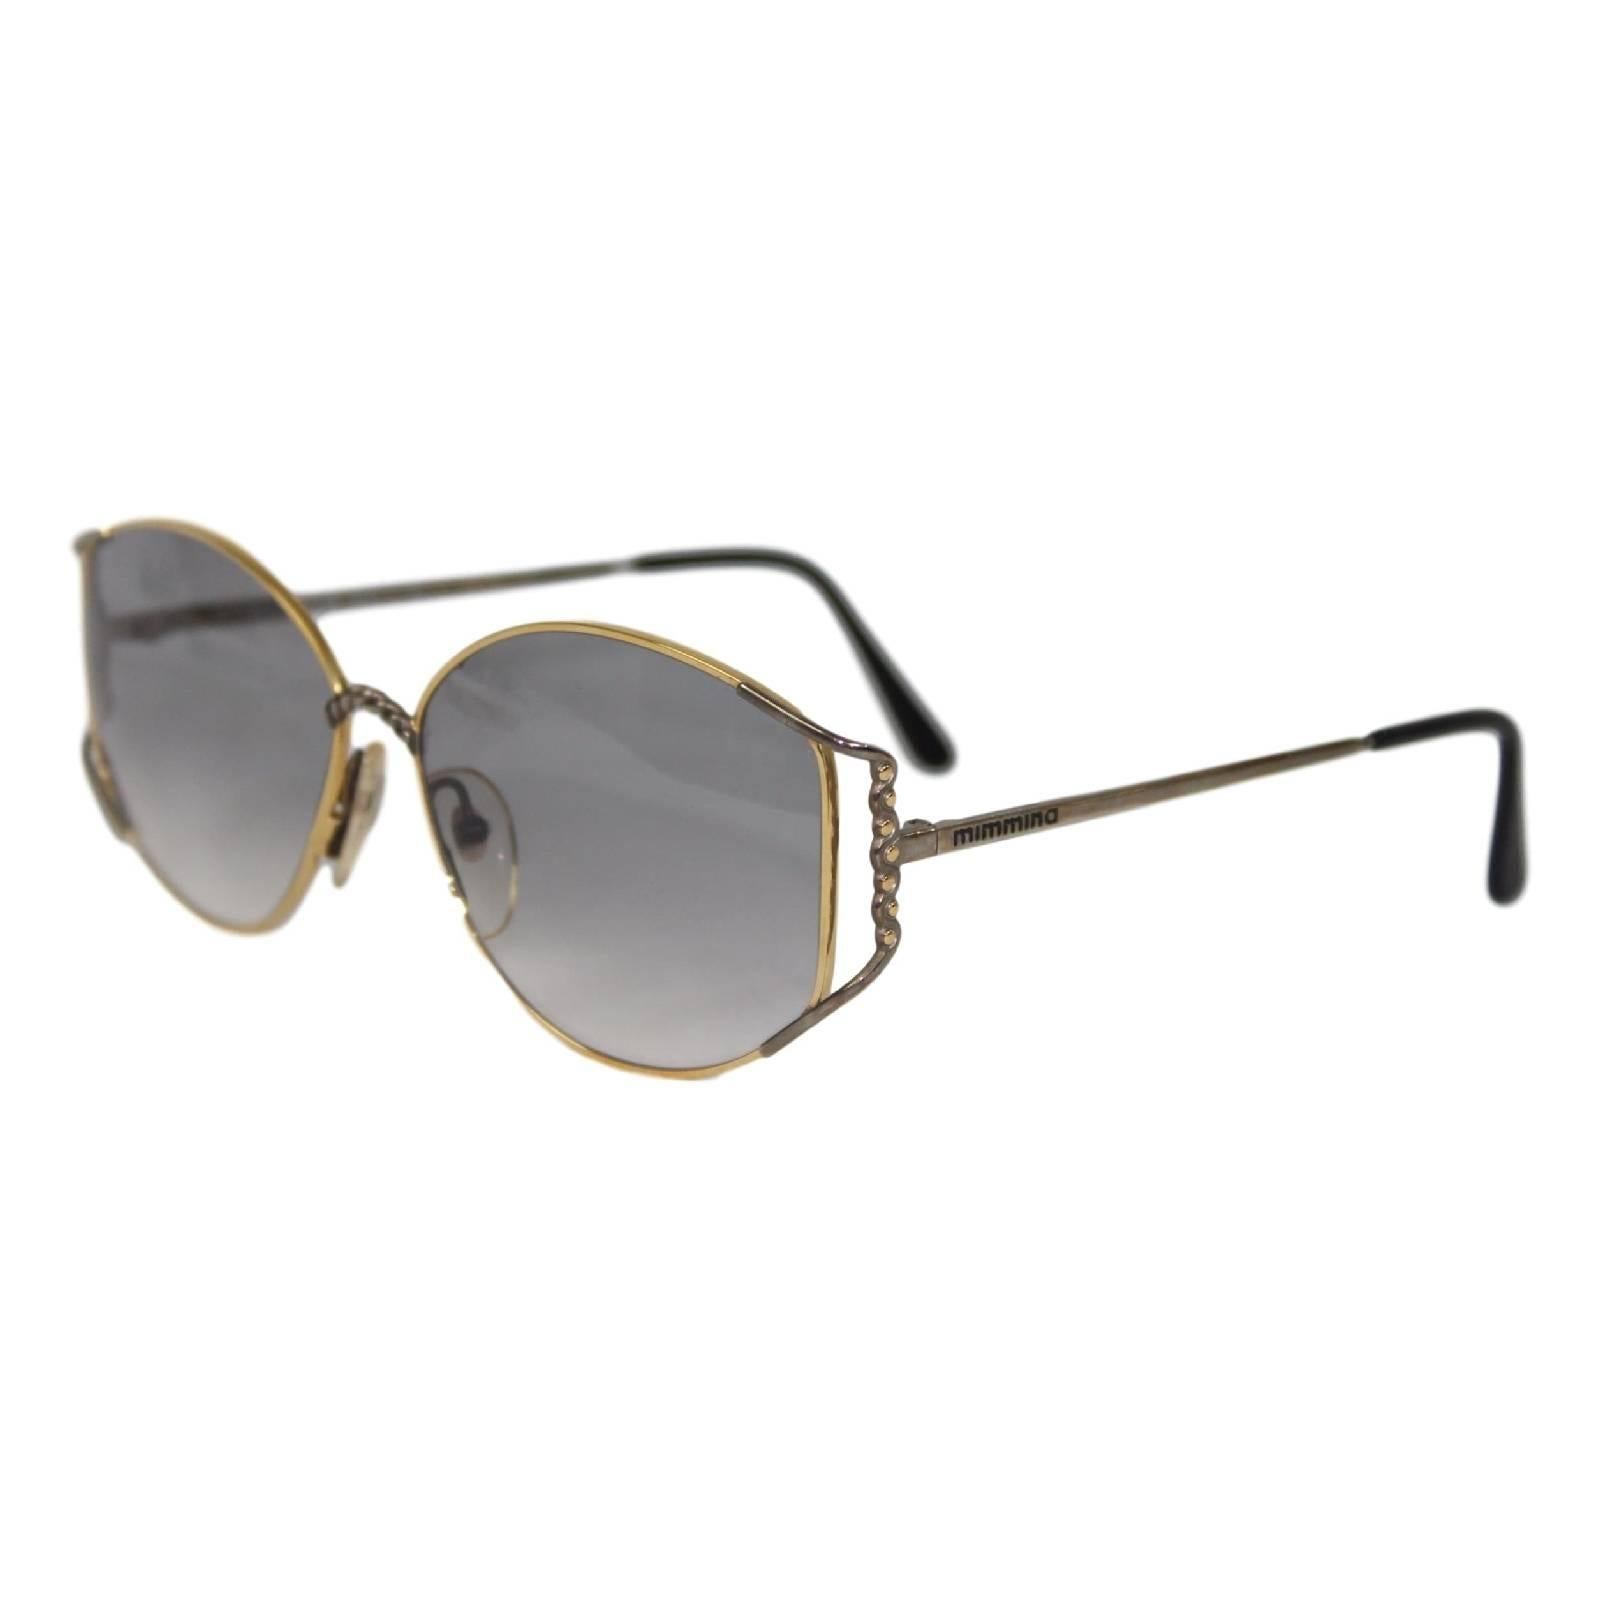 Mimmina R 119 Gold Color Frame Gray Shape Italian Sunglasses, 1980 For Sale